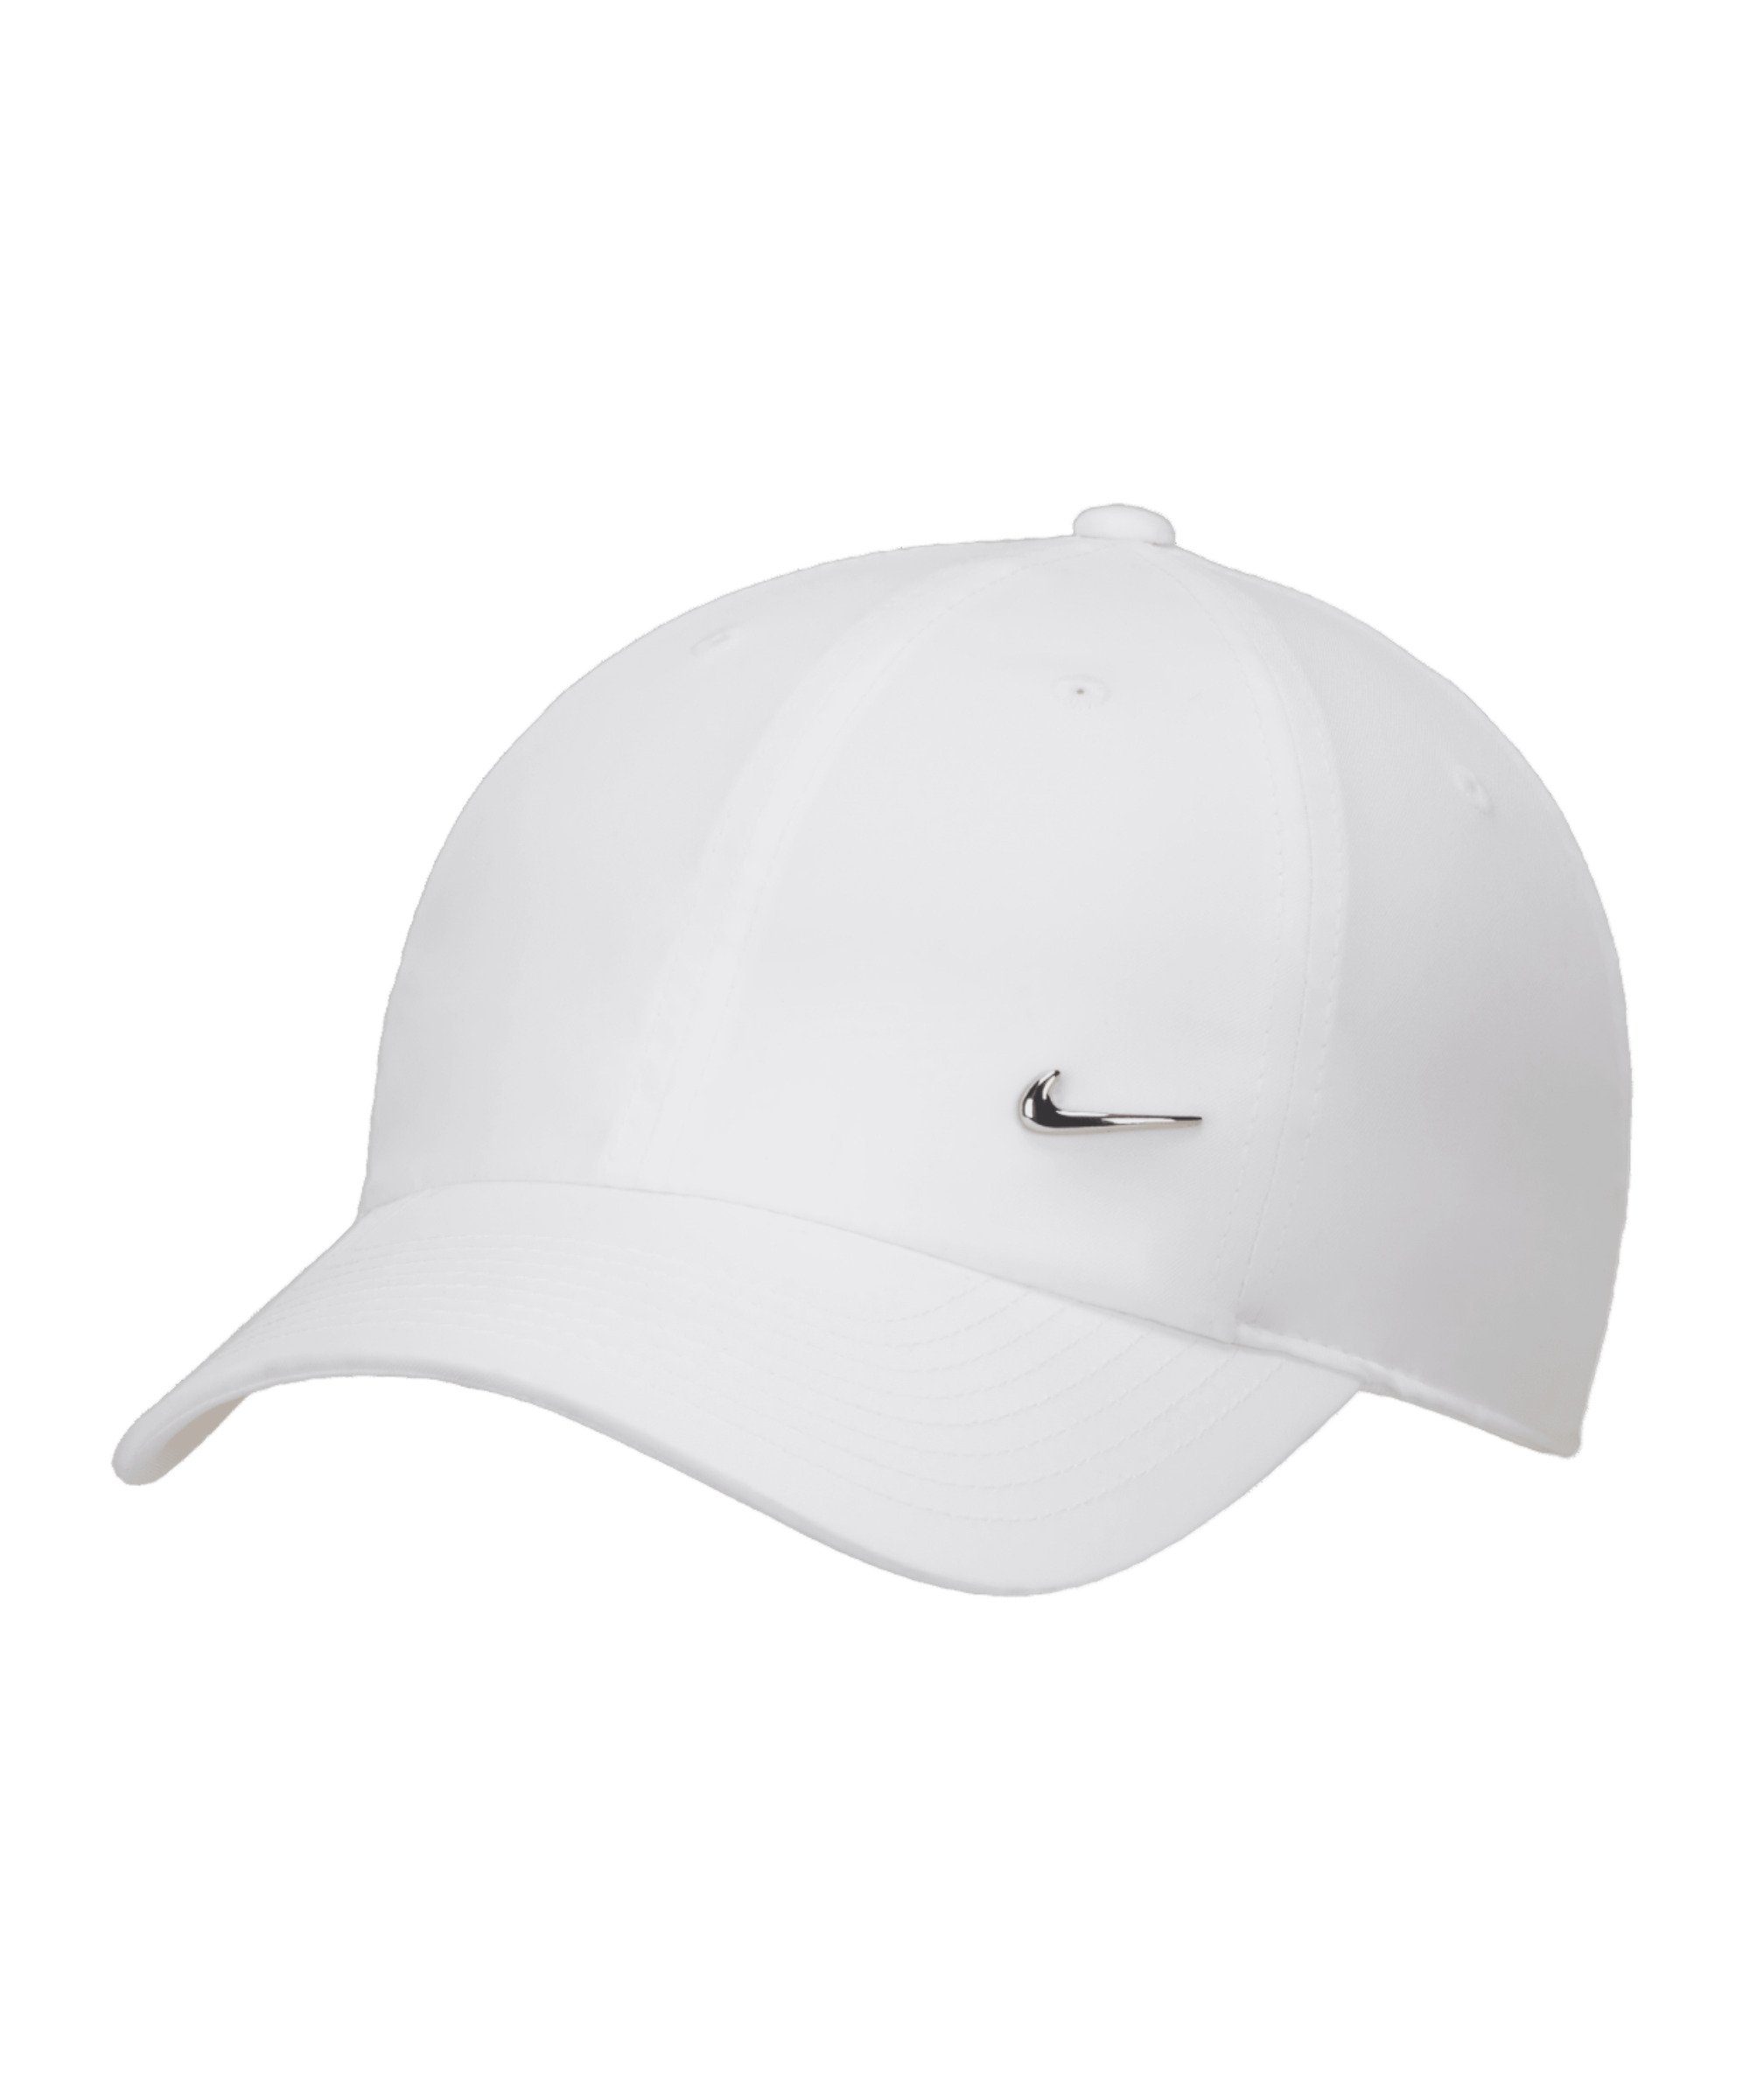 Swoosh Club weisssilber Metal Cap Cap Unstructured Baseball Nike Sportswear